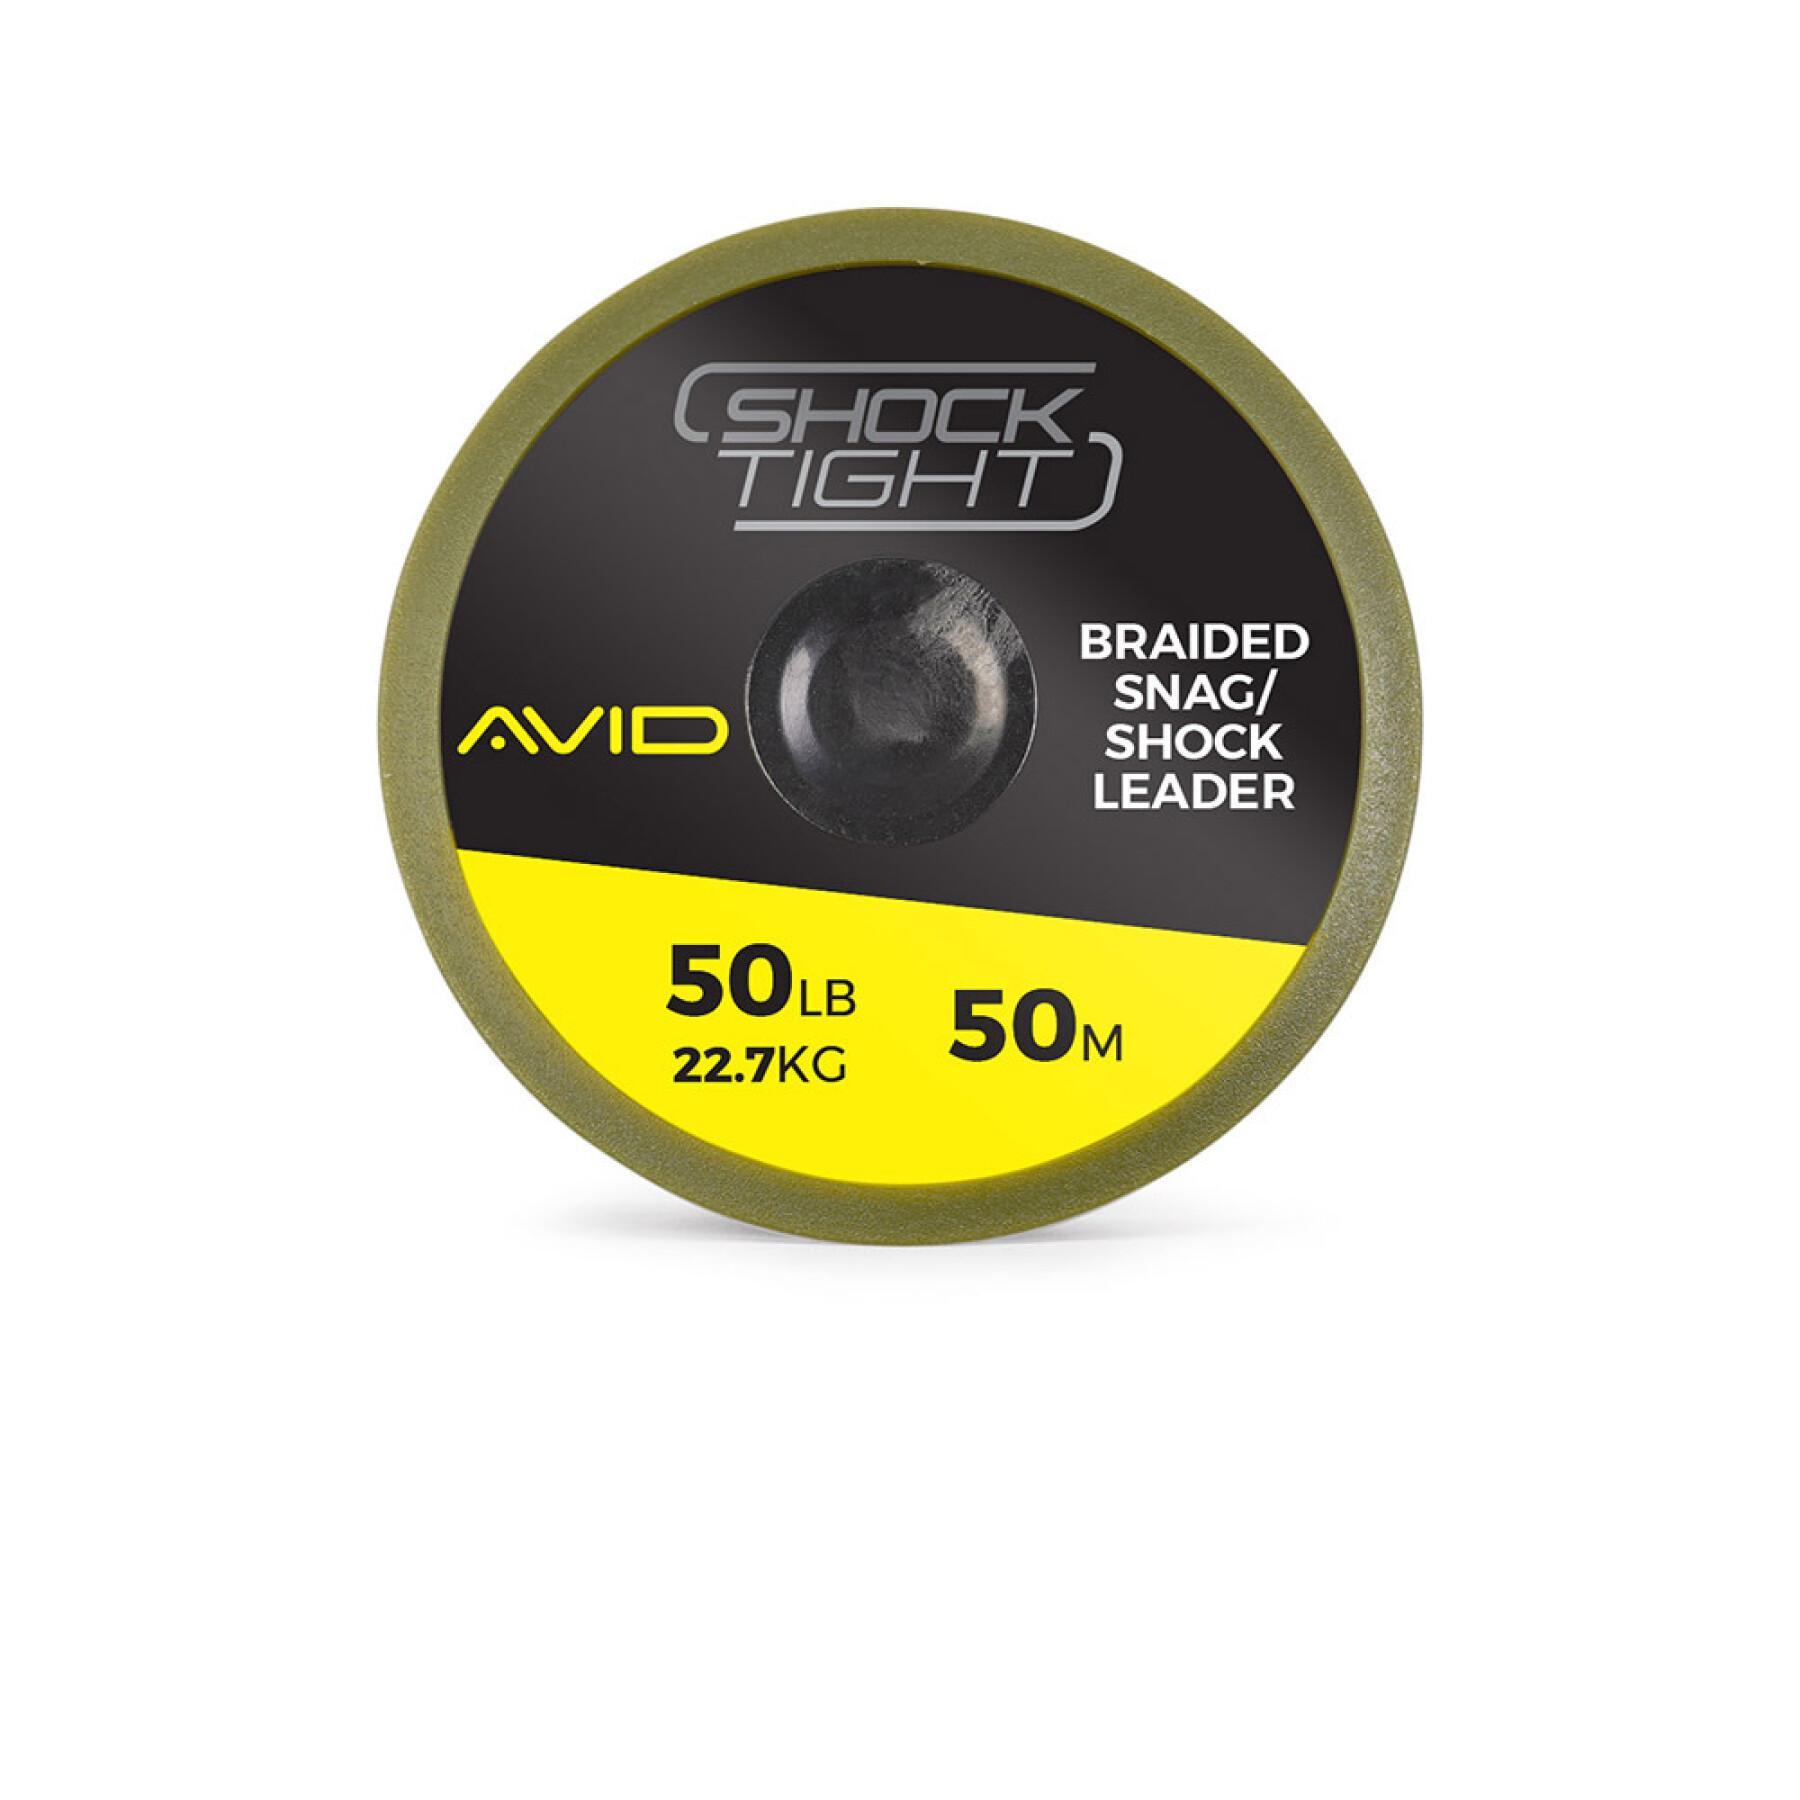 Braid Avid shock tight leader material x5